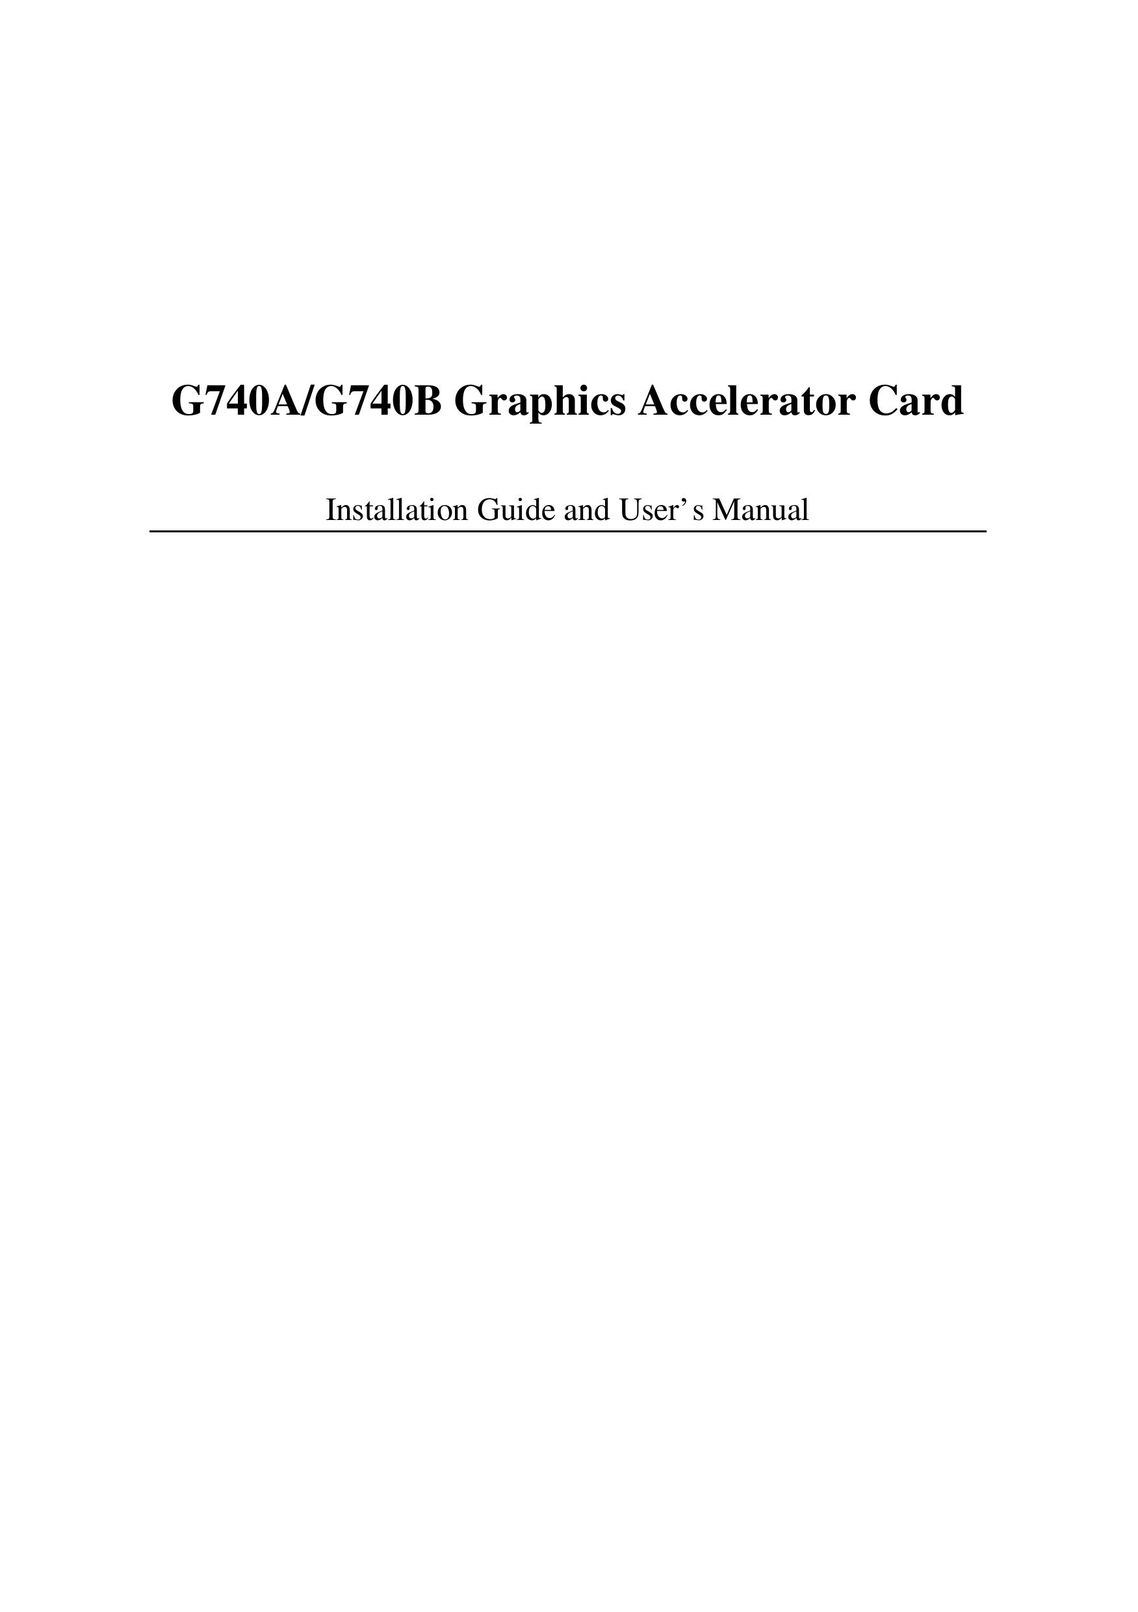 Abit G740B Computer Hardware User Manual